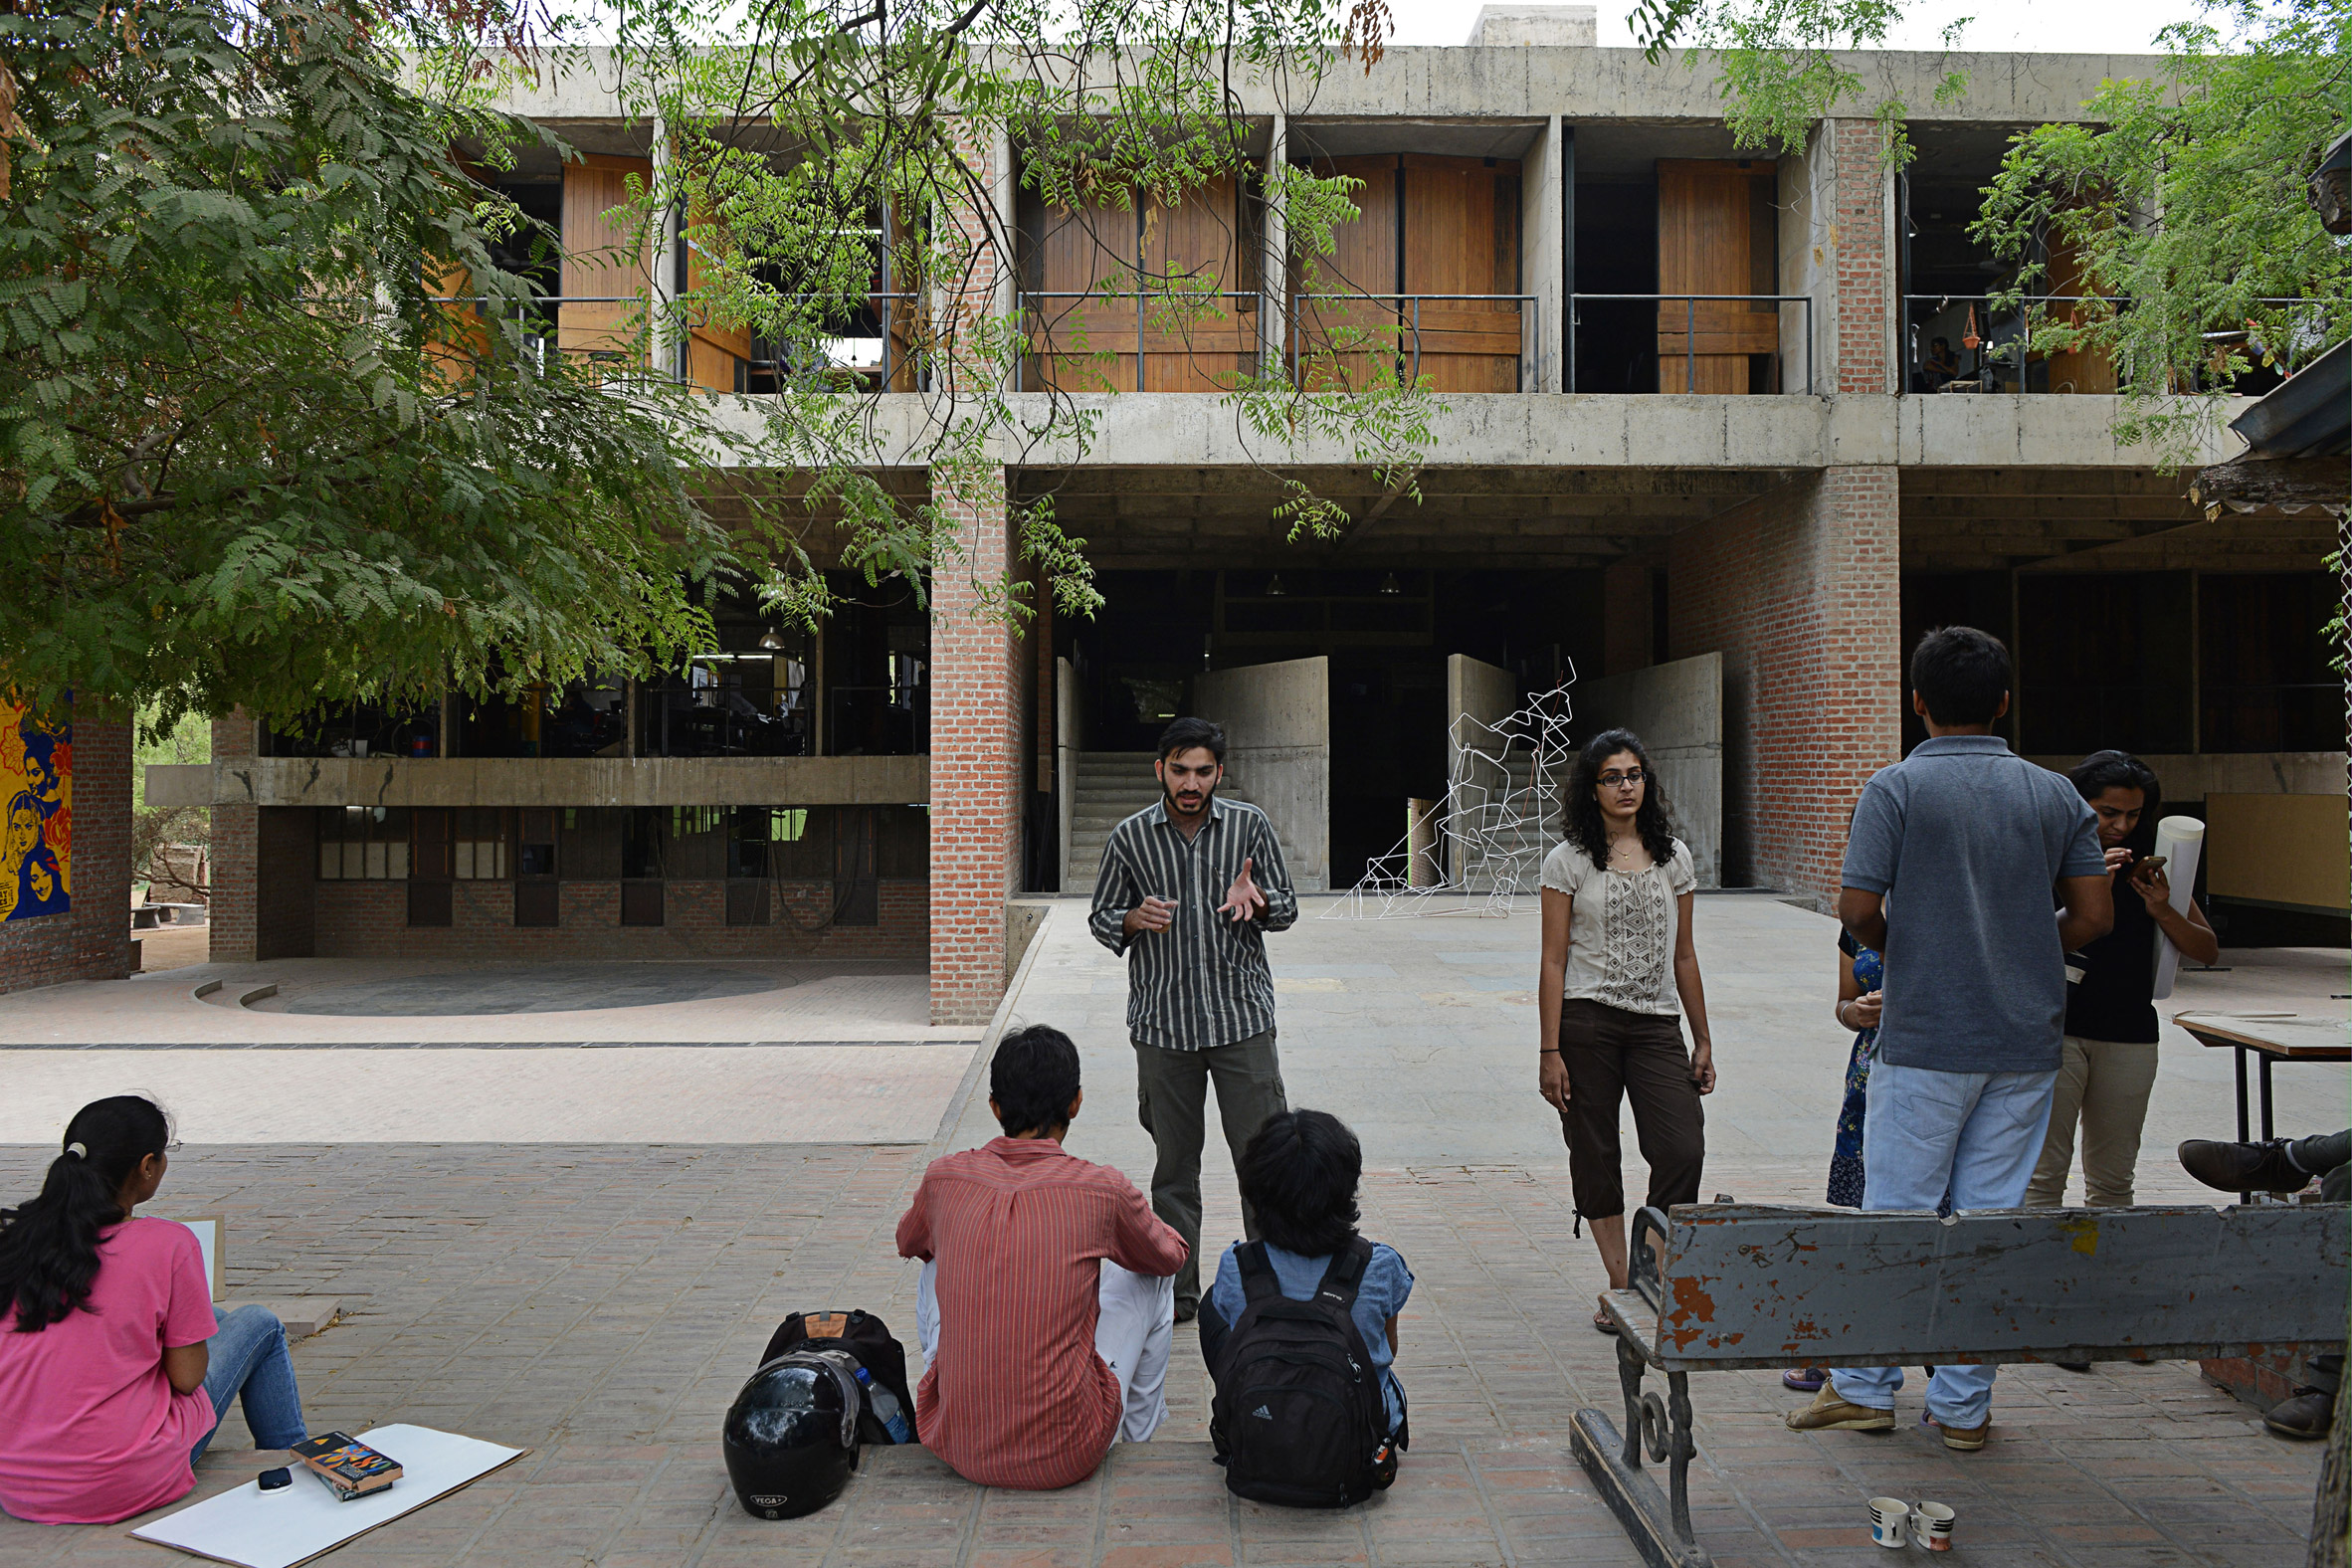 CEPT University designed and founded by Balkrishna Doshi